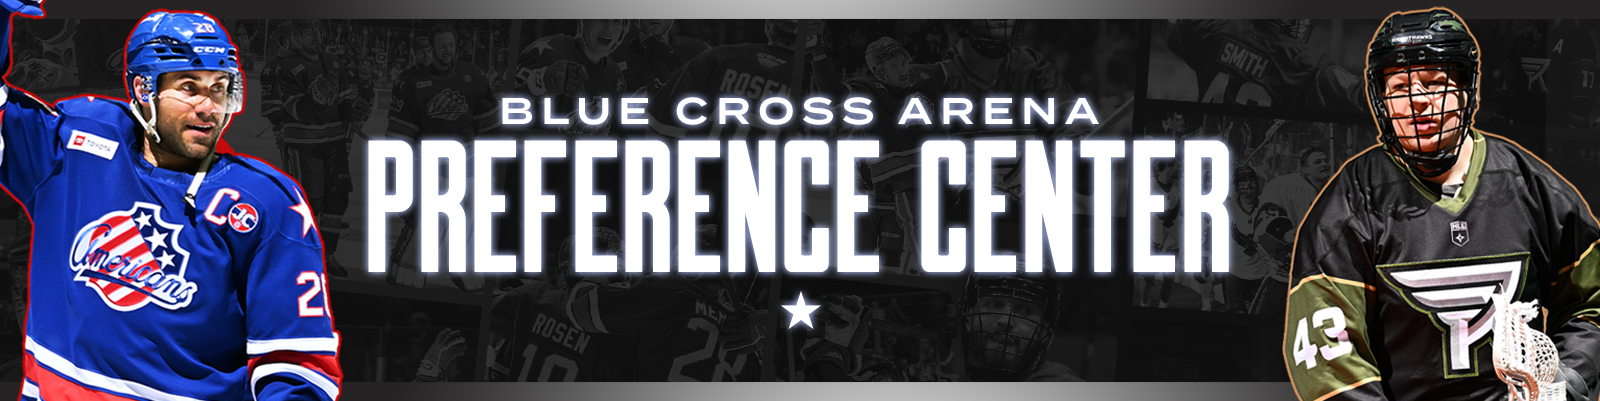 Blue Cross Arena Preference Center